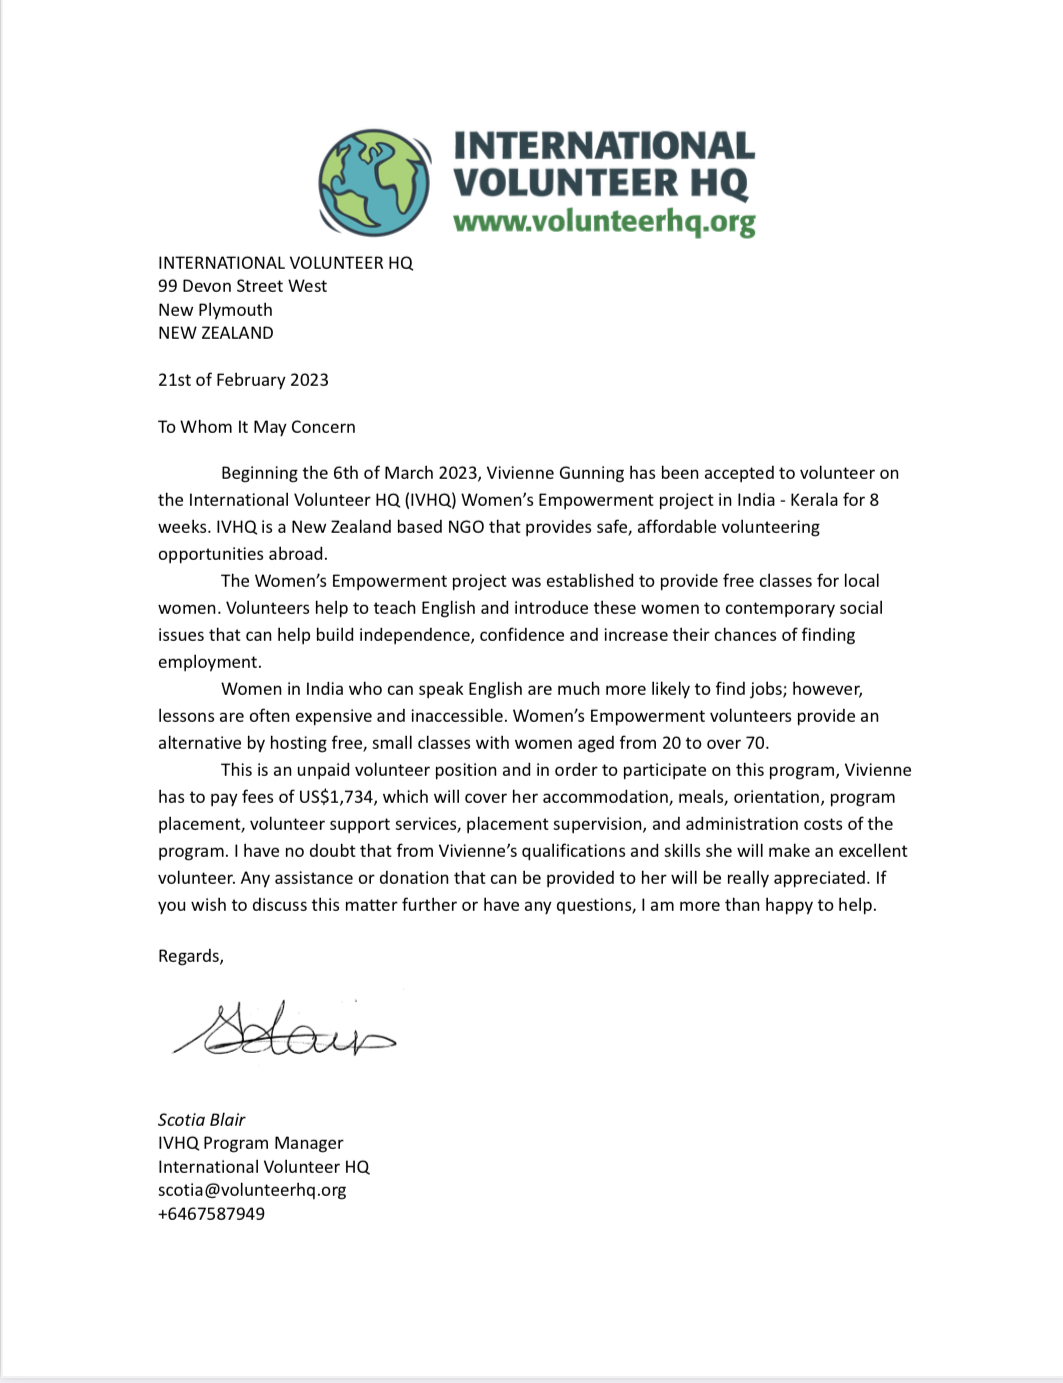 Verification Letter for fundraising efforts; IVHQ